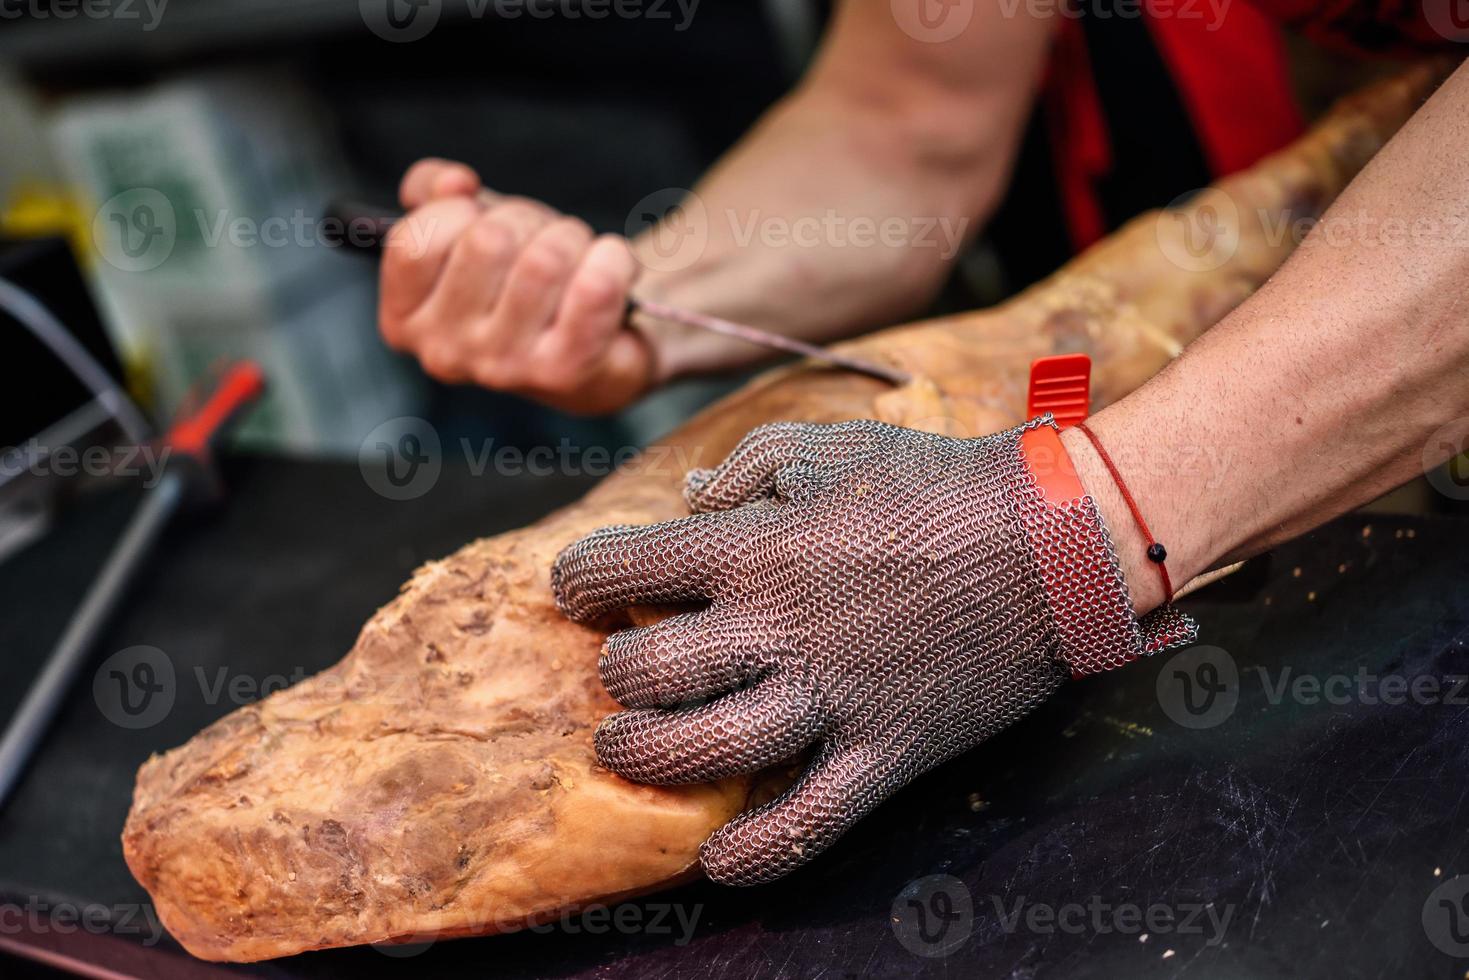 Carnicero deshuesando un jamón guante de malla metálica de seguridad 4834265 Foto de stock en Vecteezy